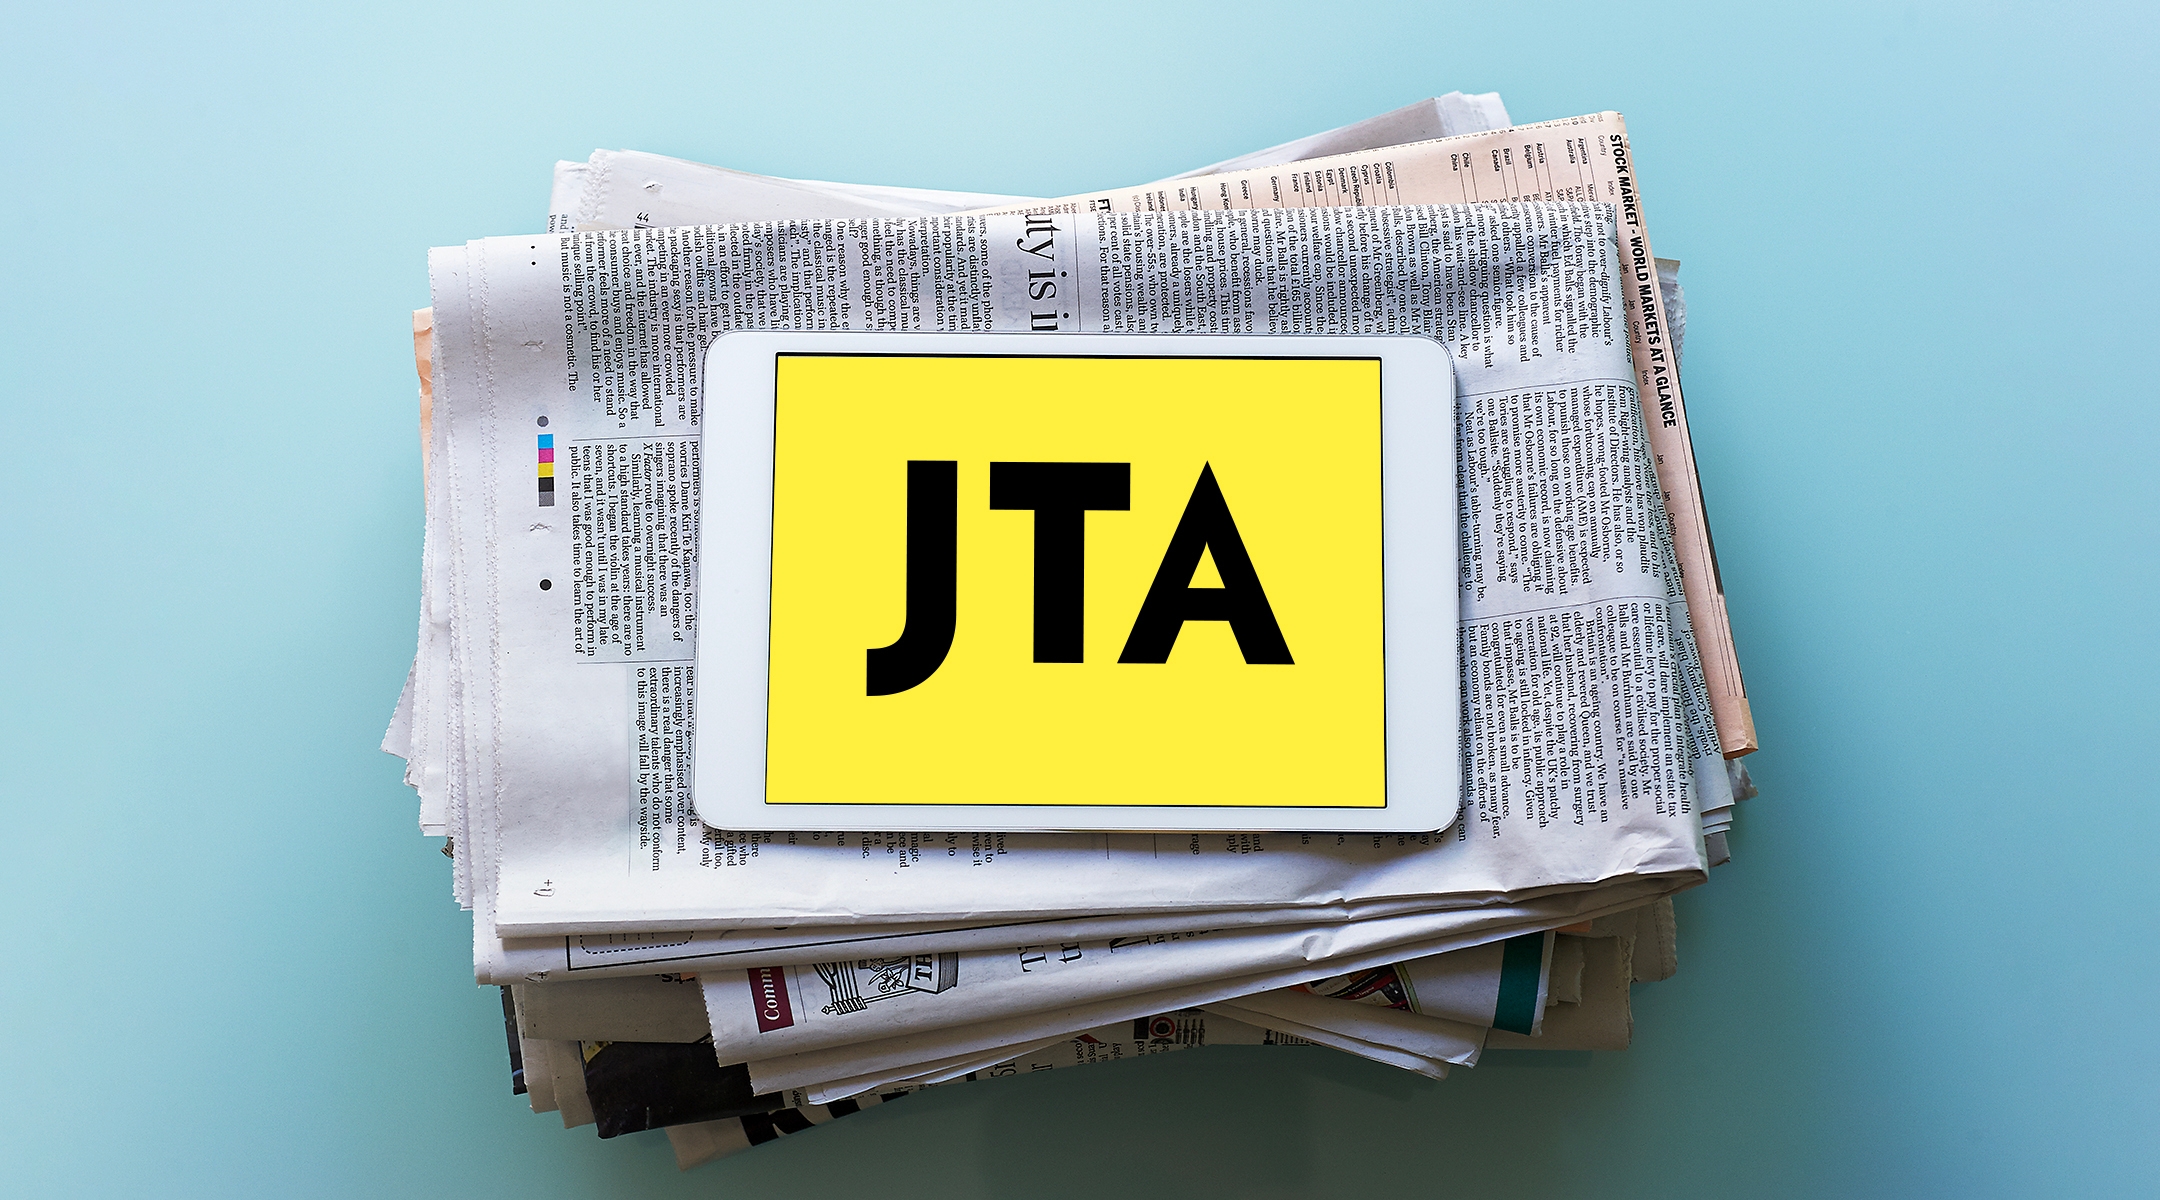 Newspaper with JTA logo.